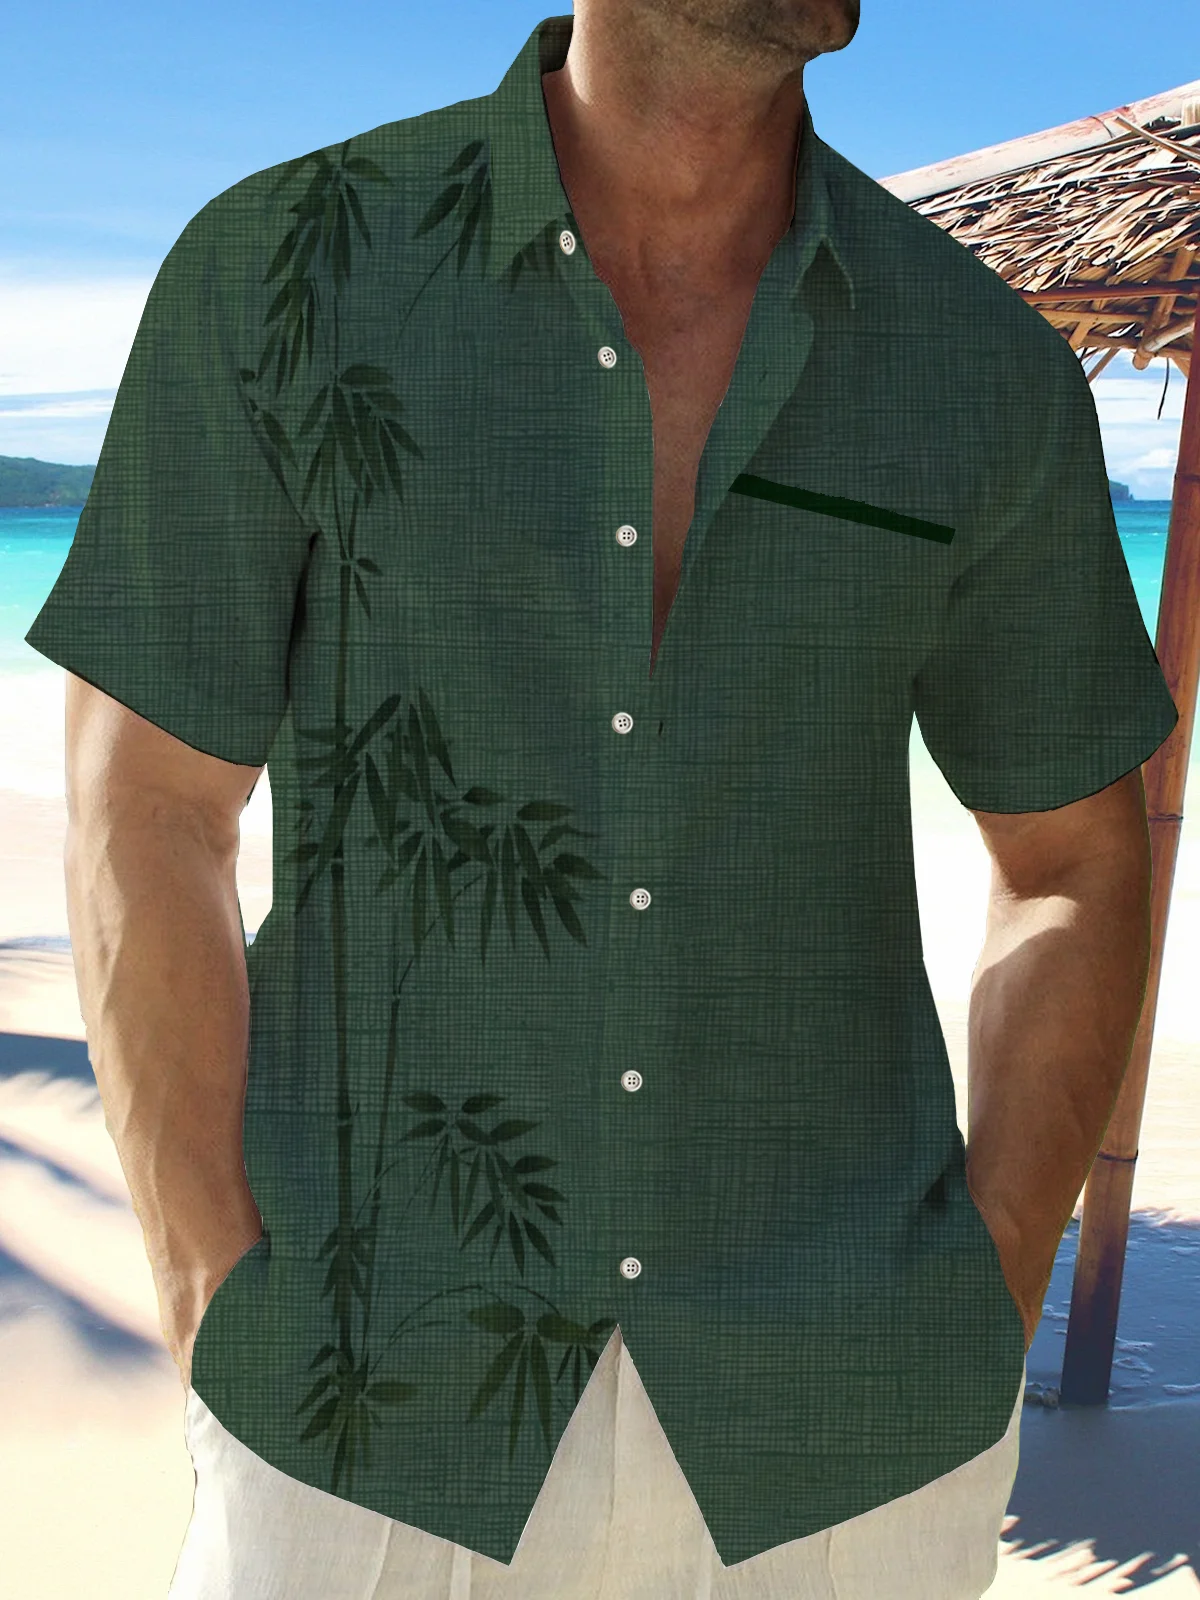 Royaura Natural Fiber Bamboo Print Basics Men's Vacation Beach Hawaiian Big & Tall Aloha Shirt